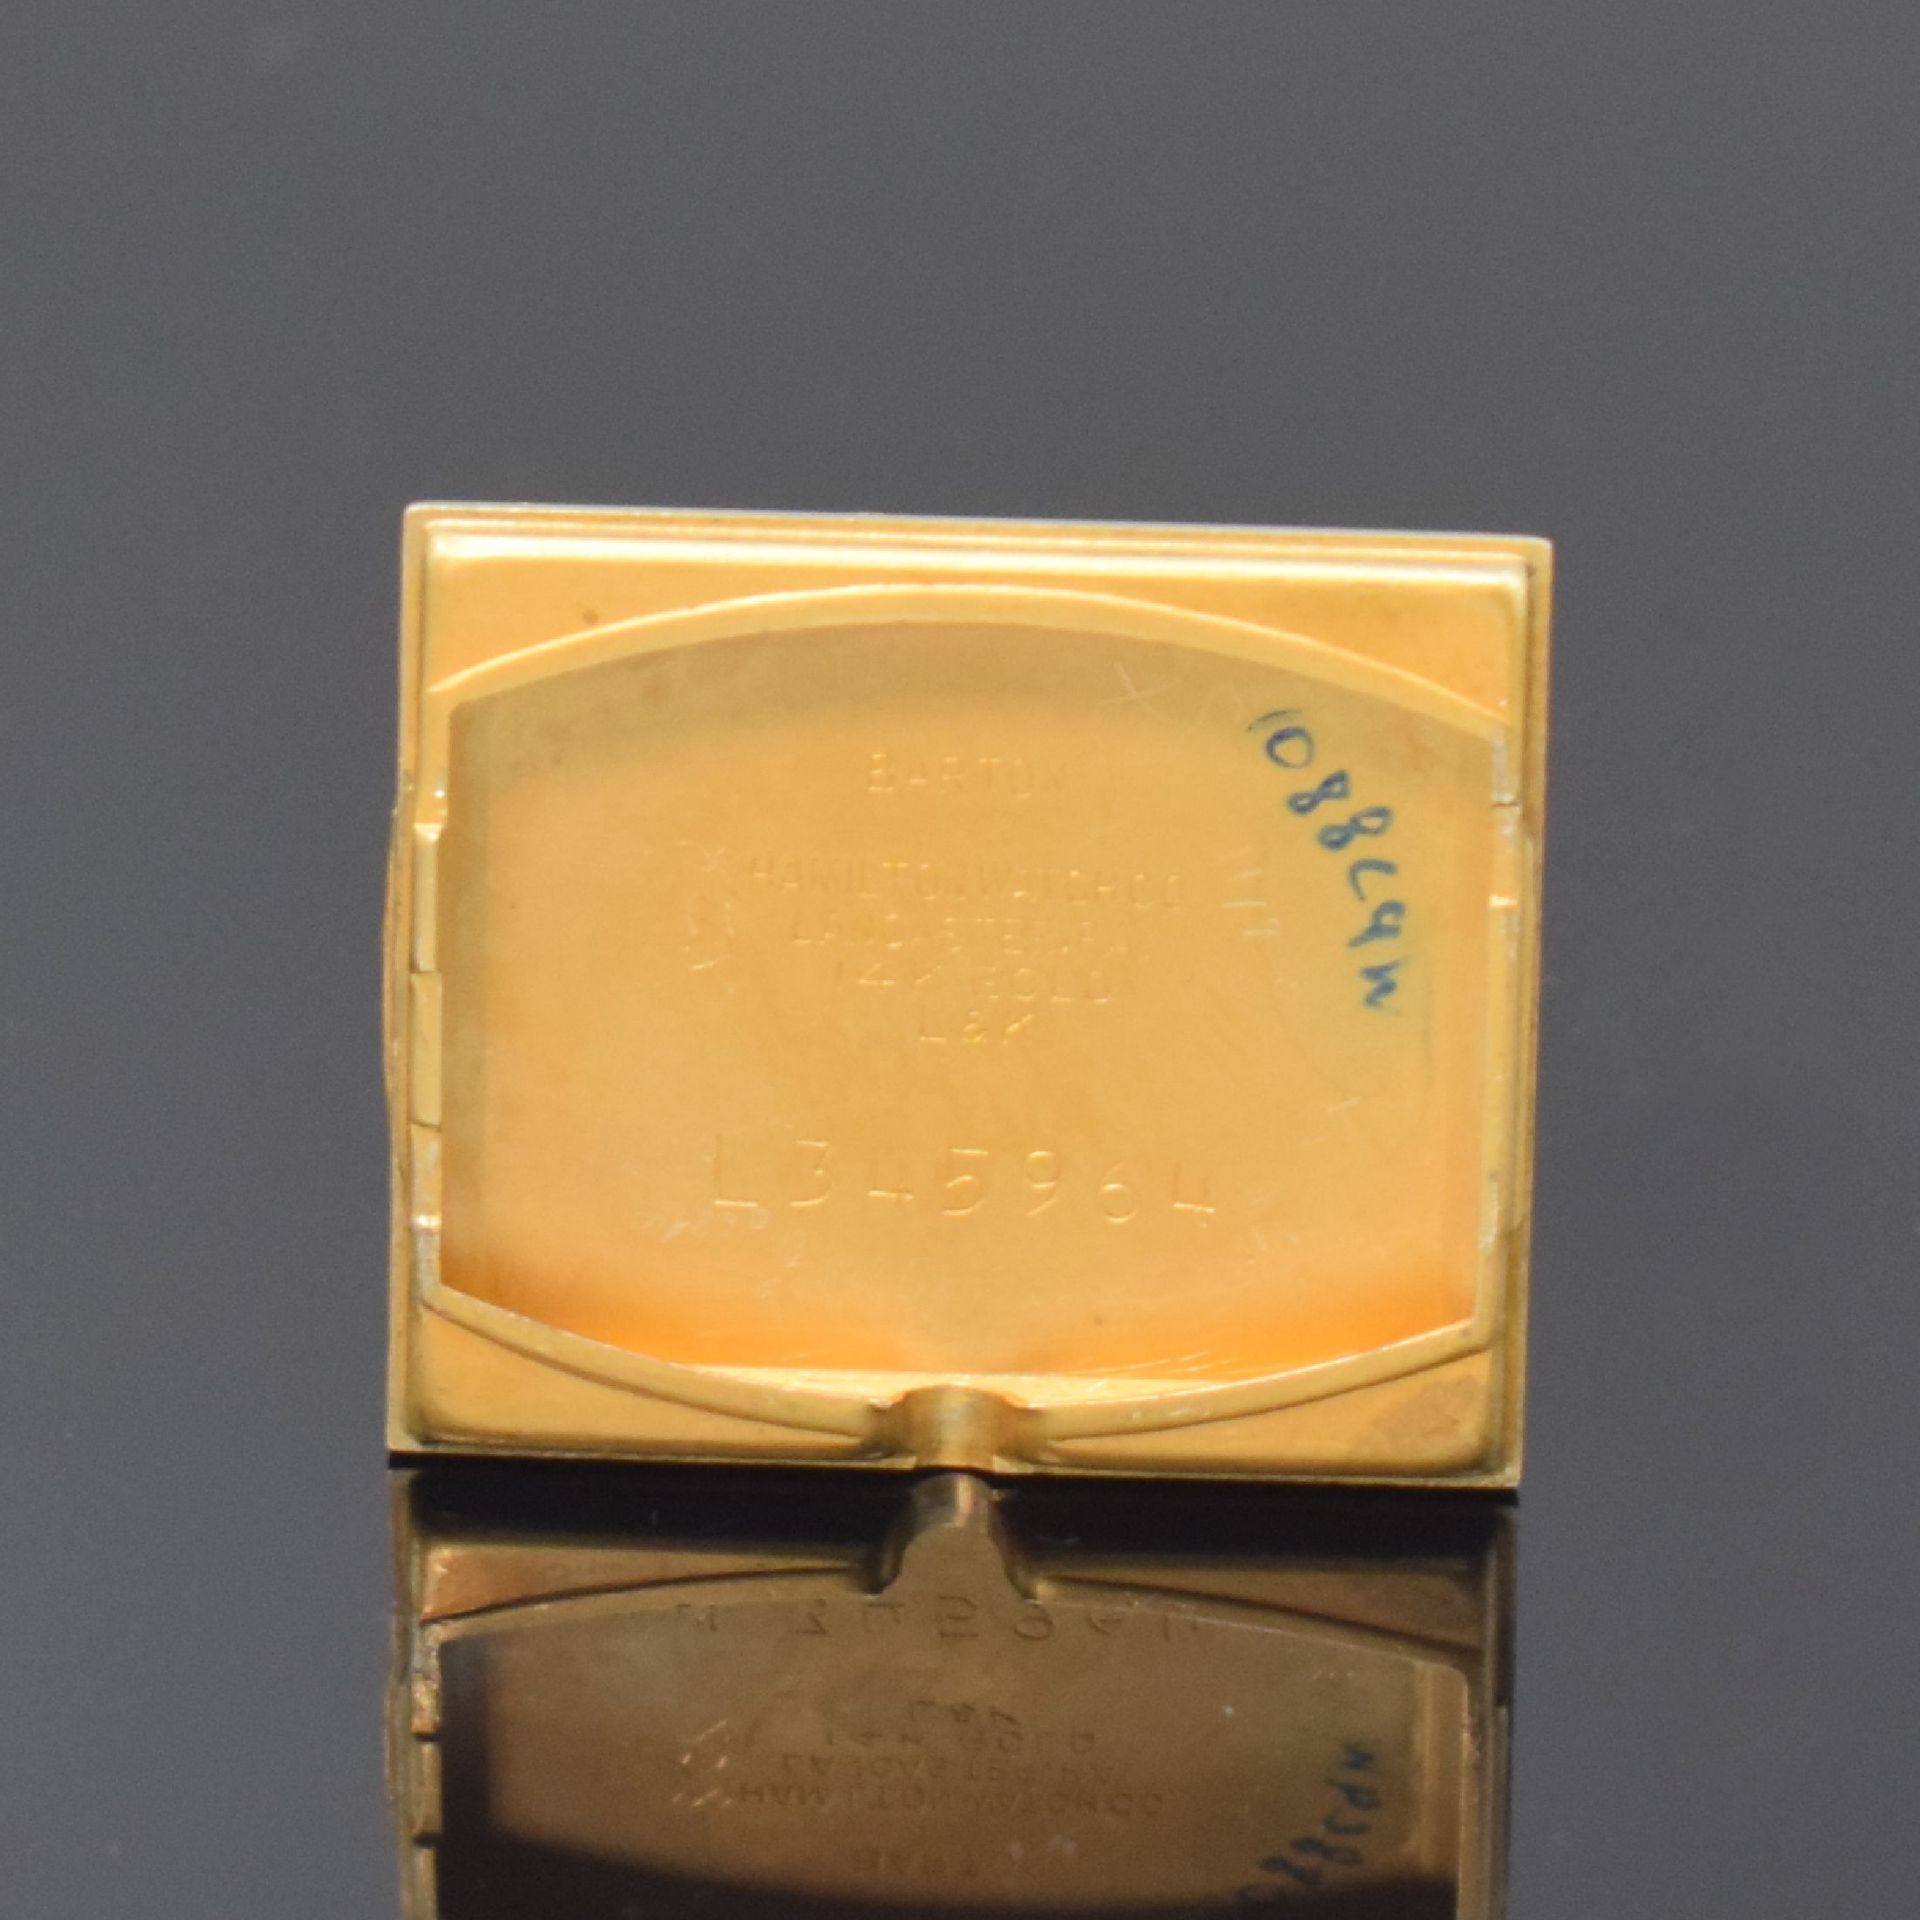 HAMILTON rechteckige Armbanduhr in 14k Gelbgold, USA um - Image 6 of 6